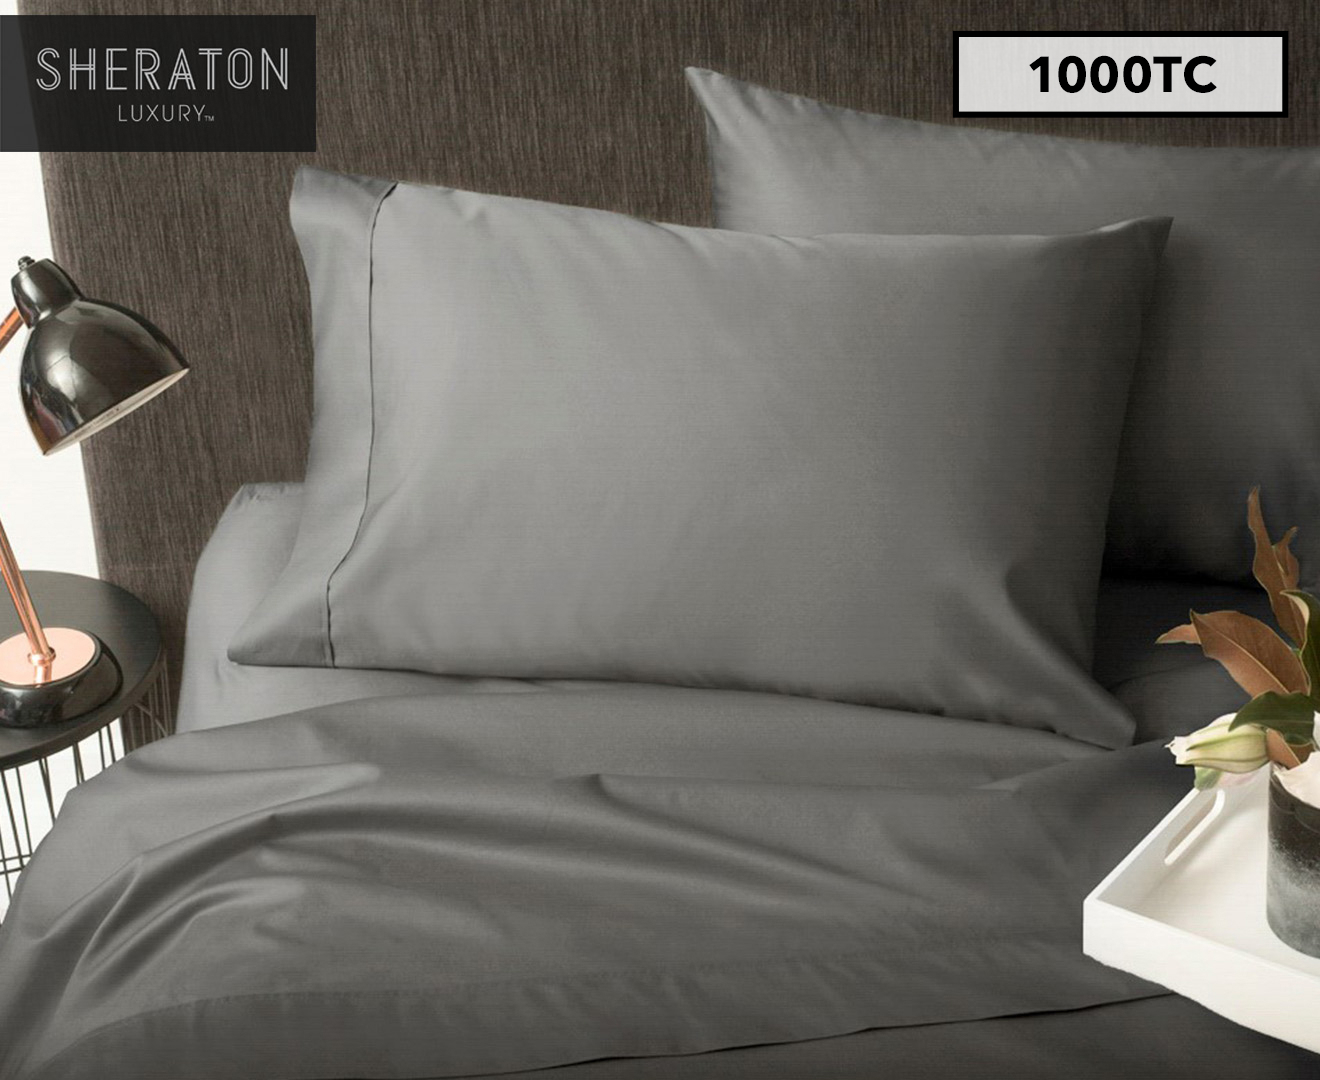 1000TC Cotton Rich Sheets  Sheraton Luxury - Premium experiences